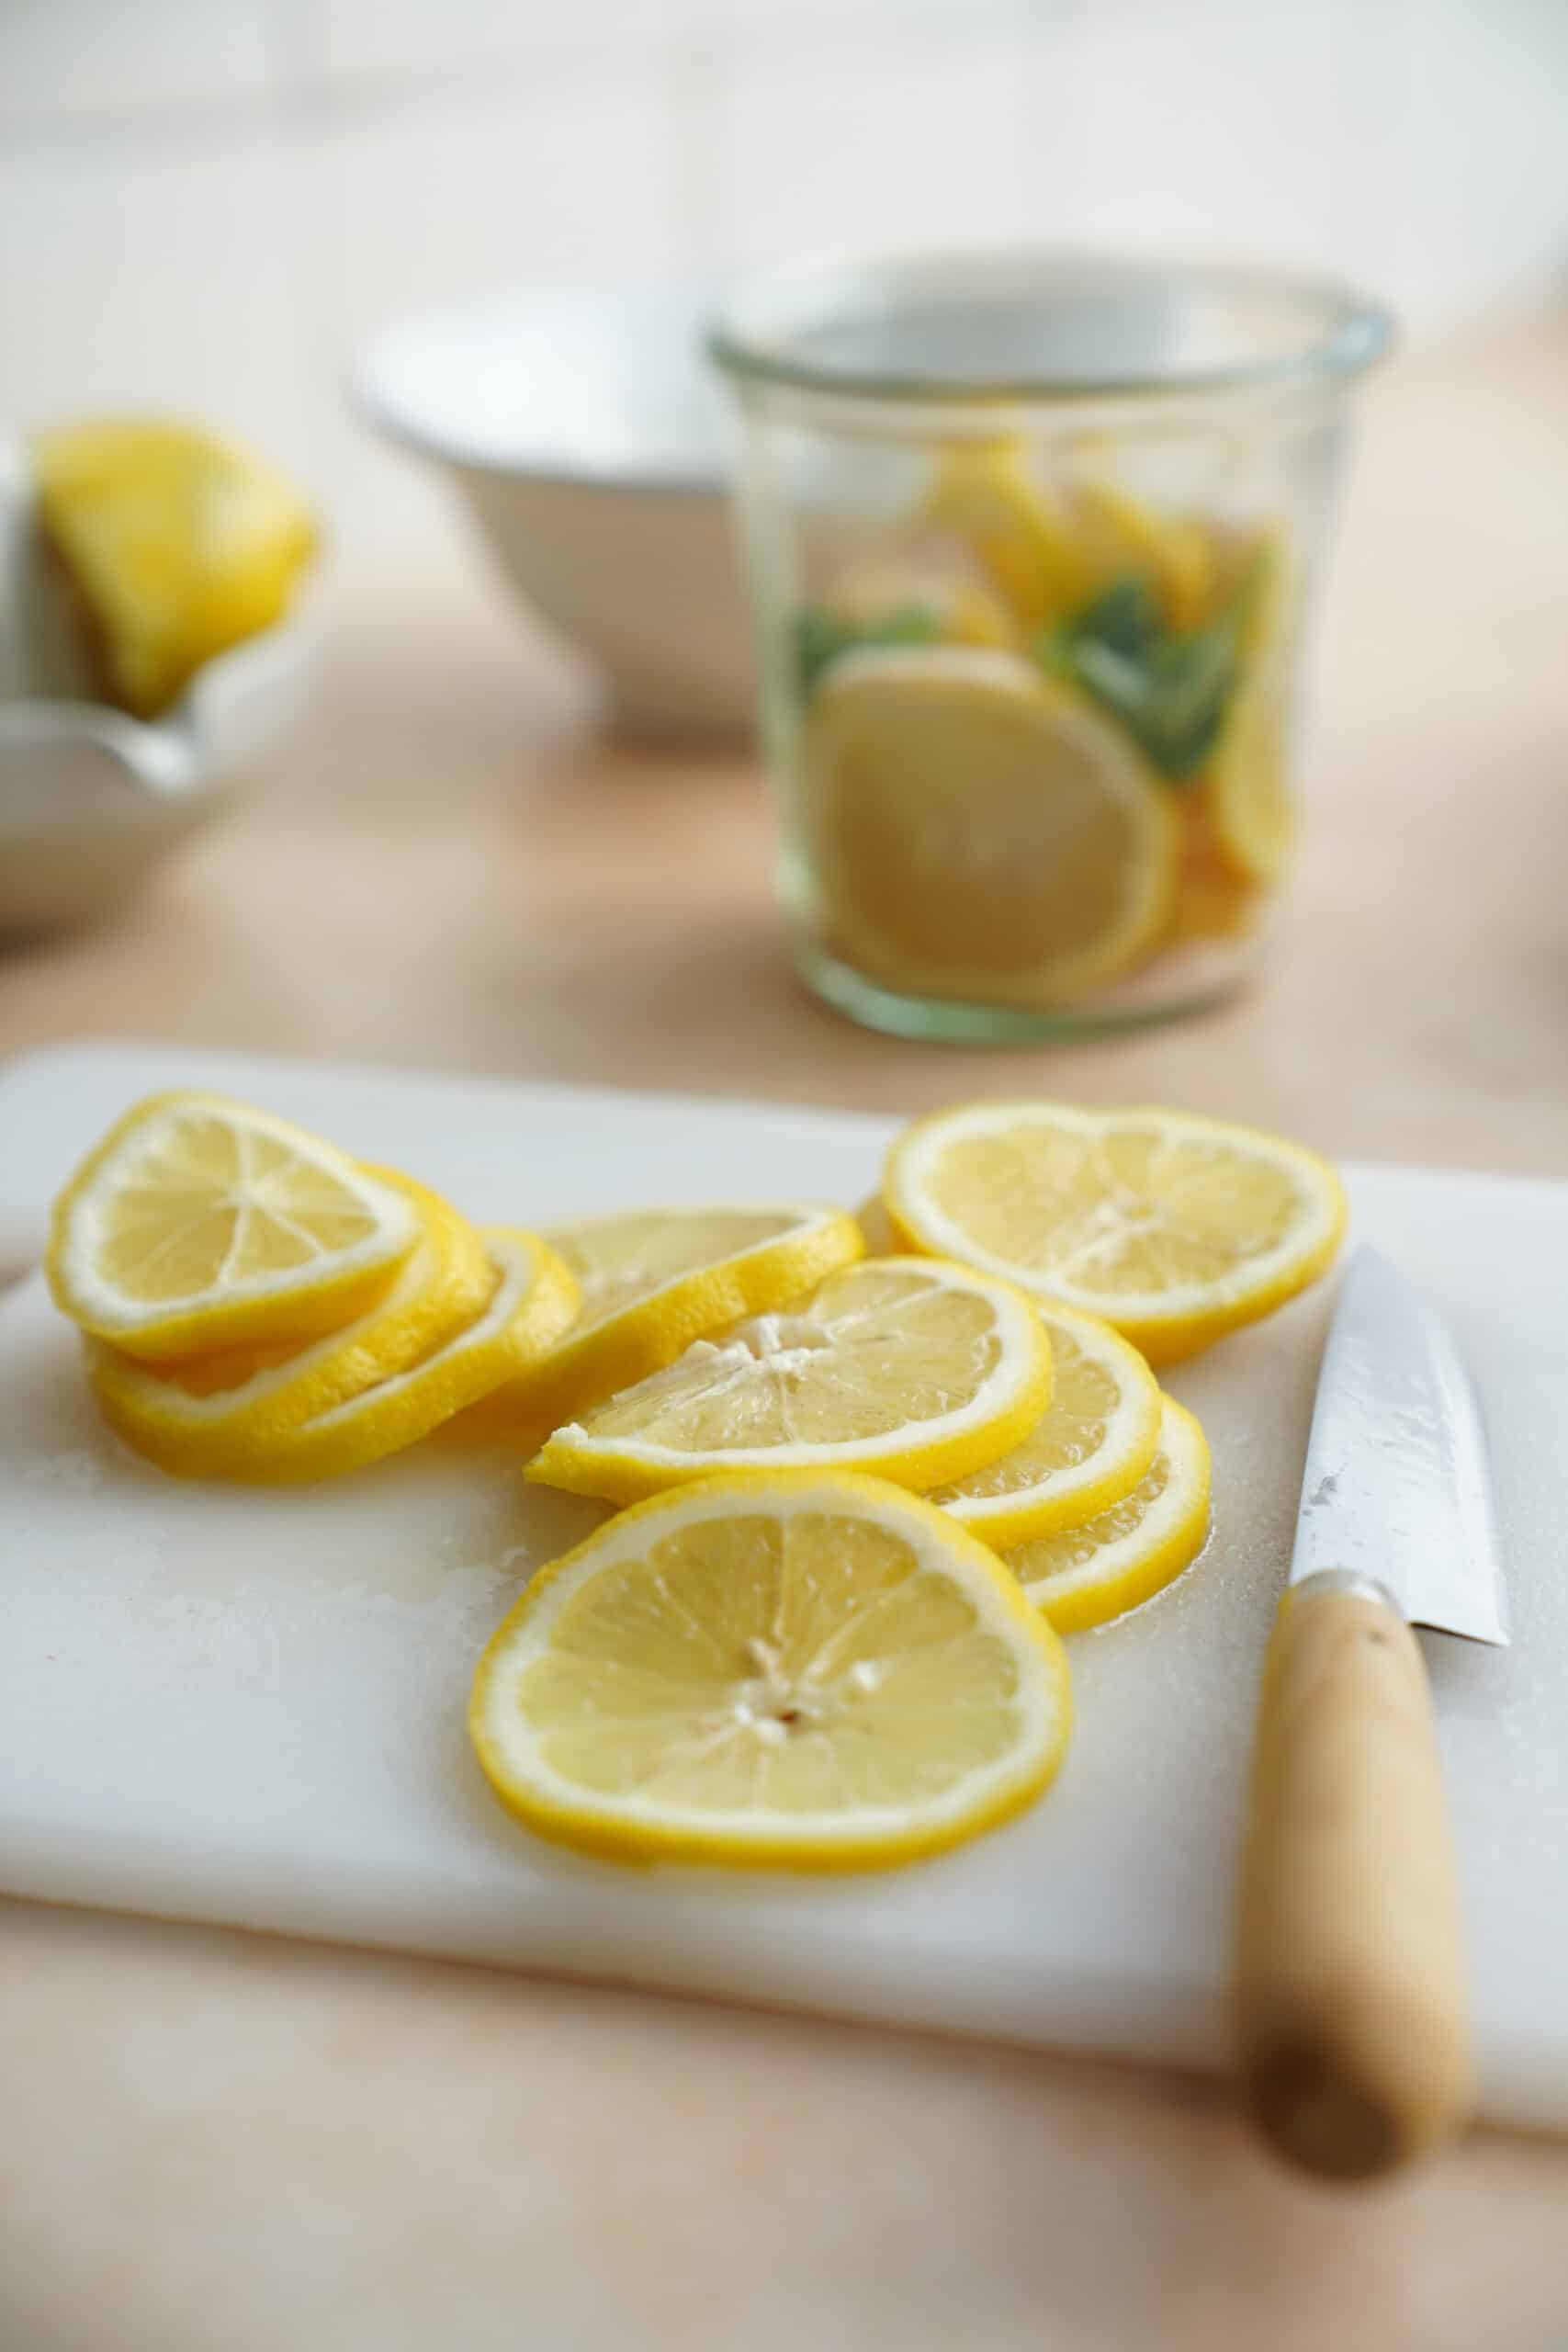 Chopped lemons on cutting board